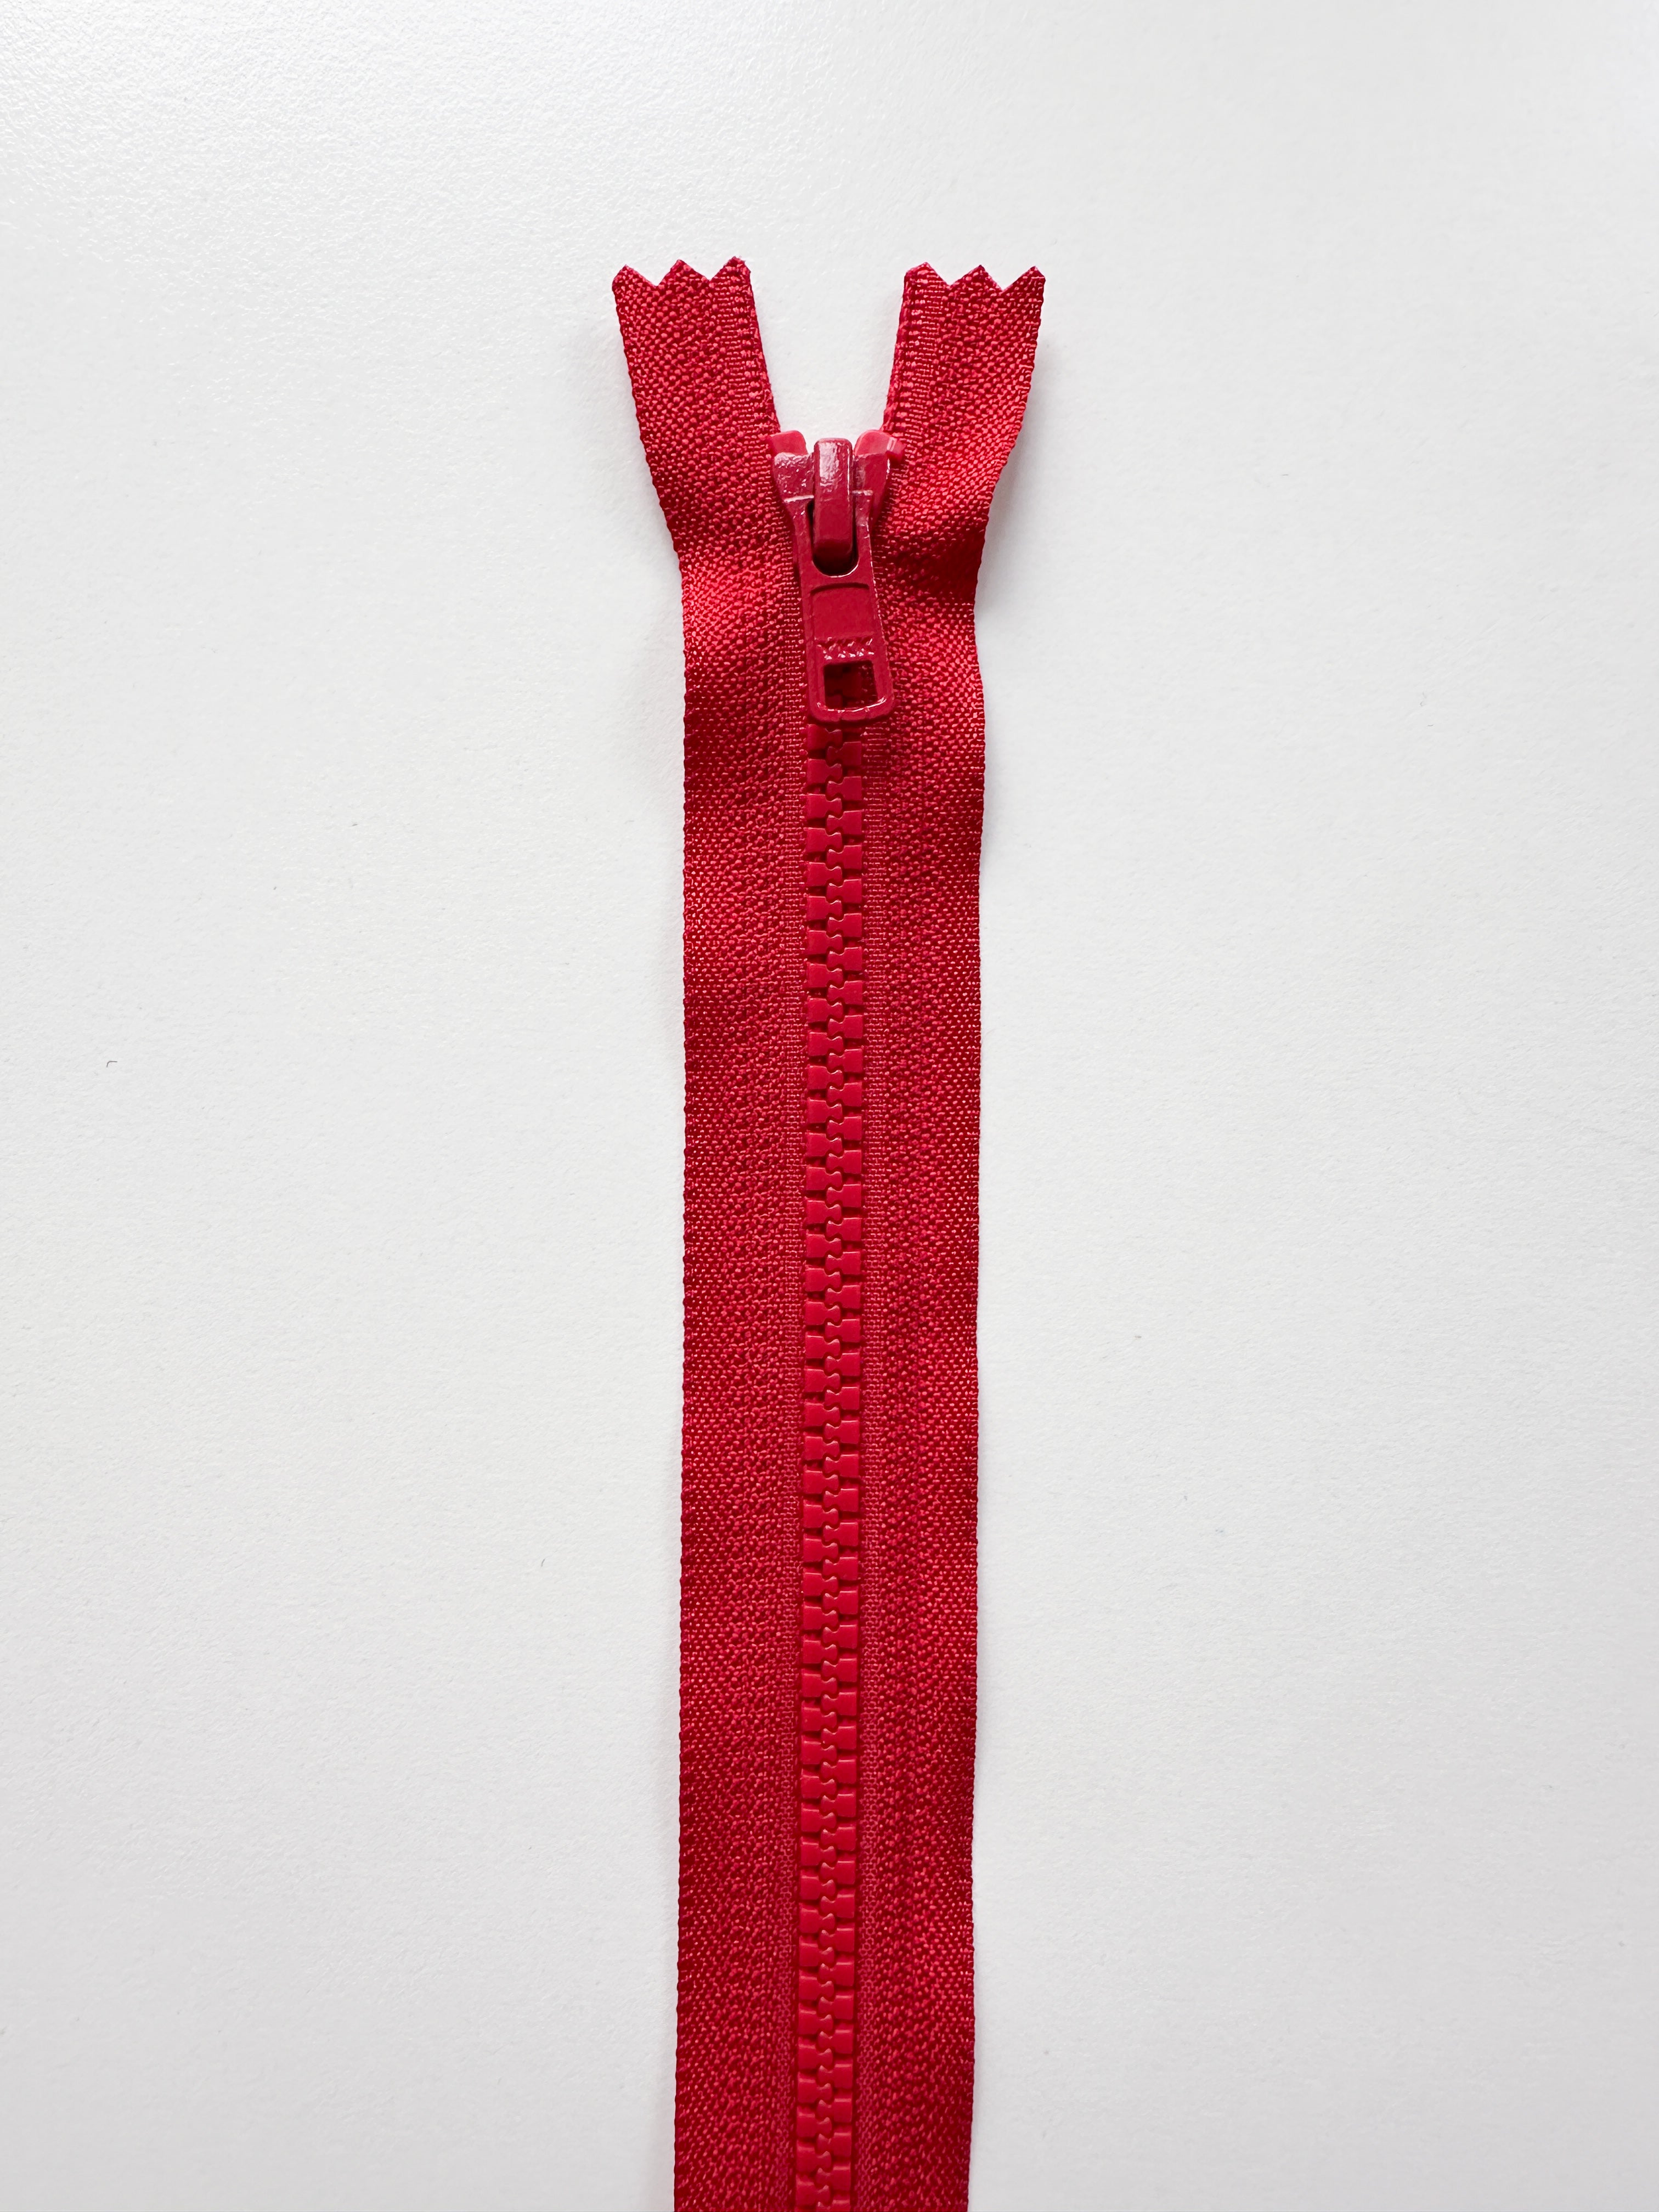 YKK Vislon plastic zippers